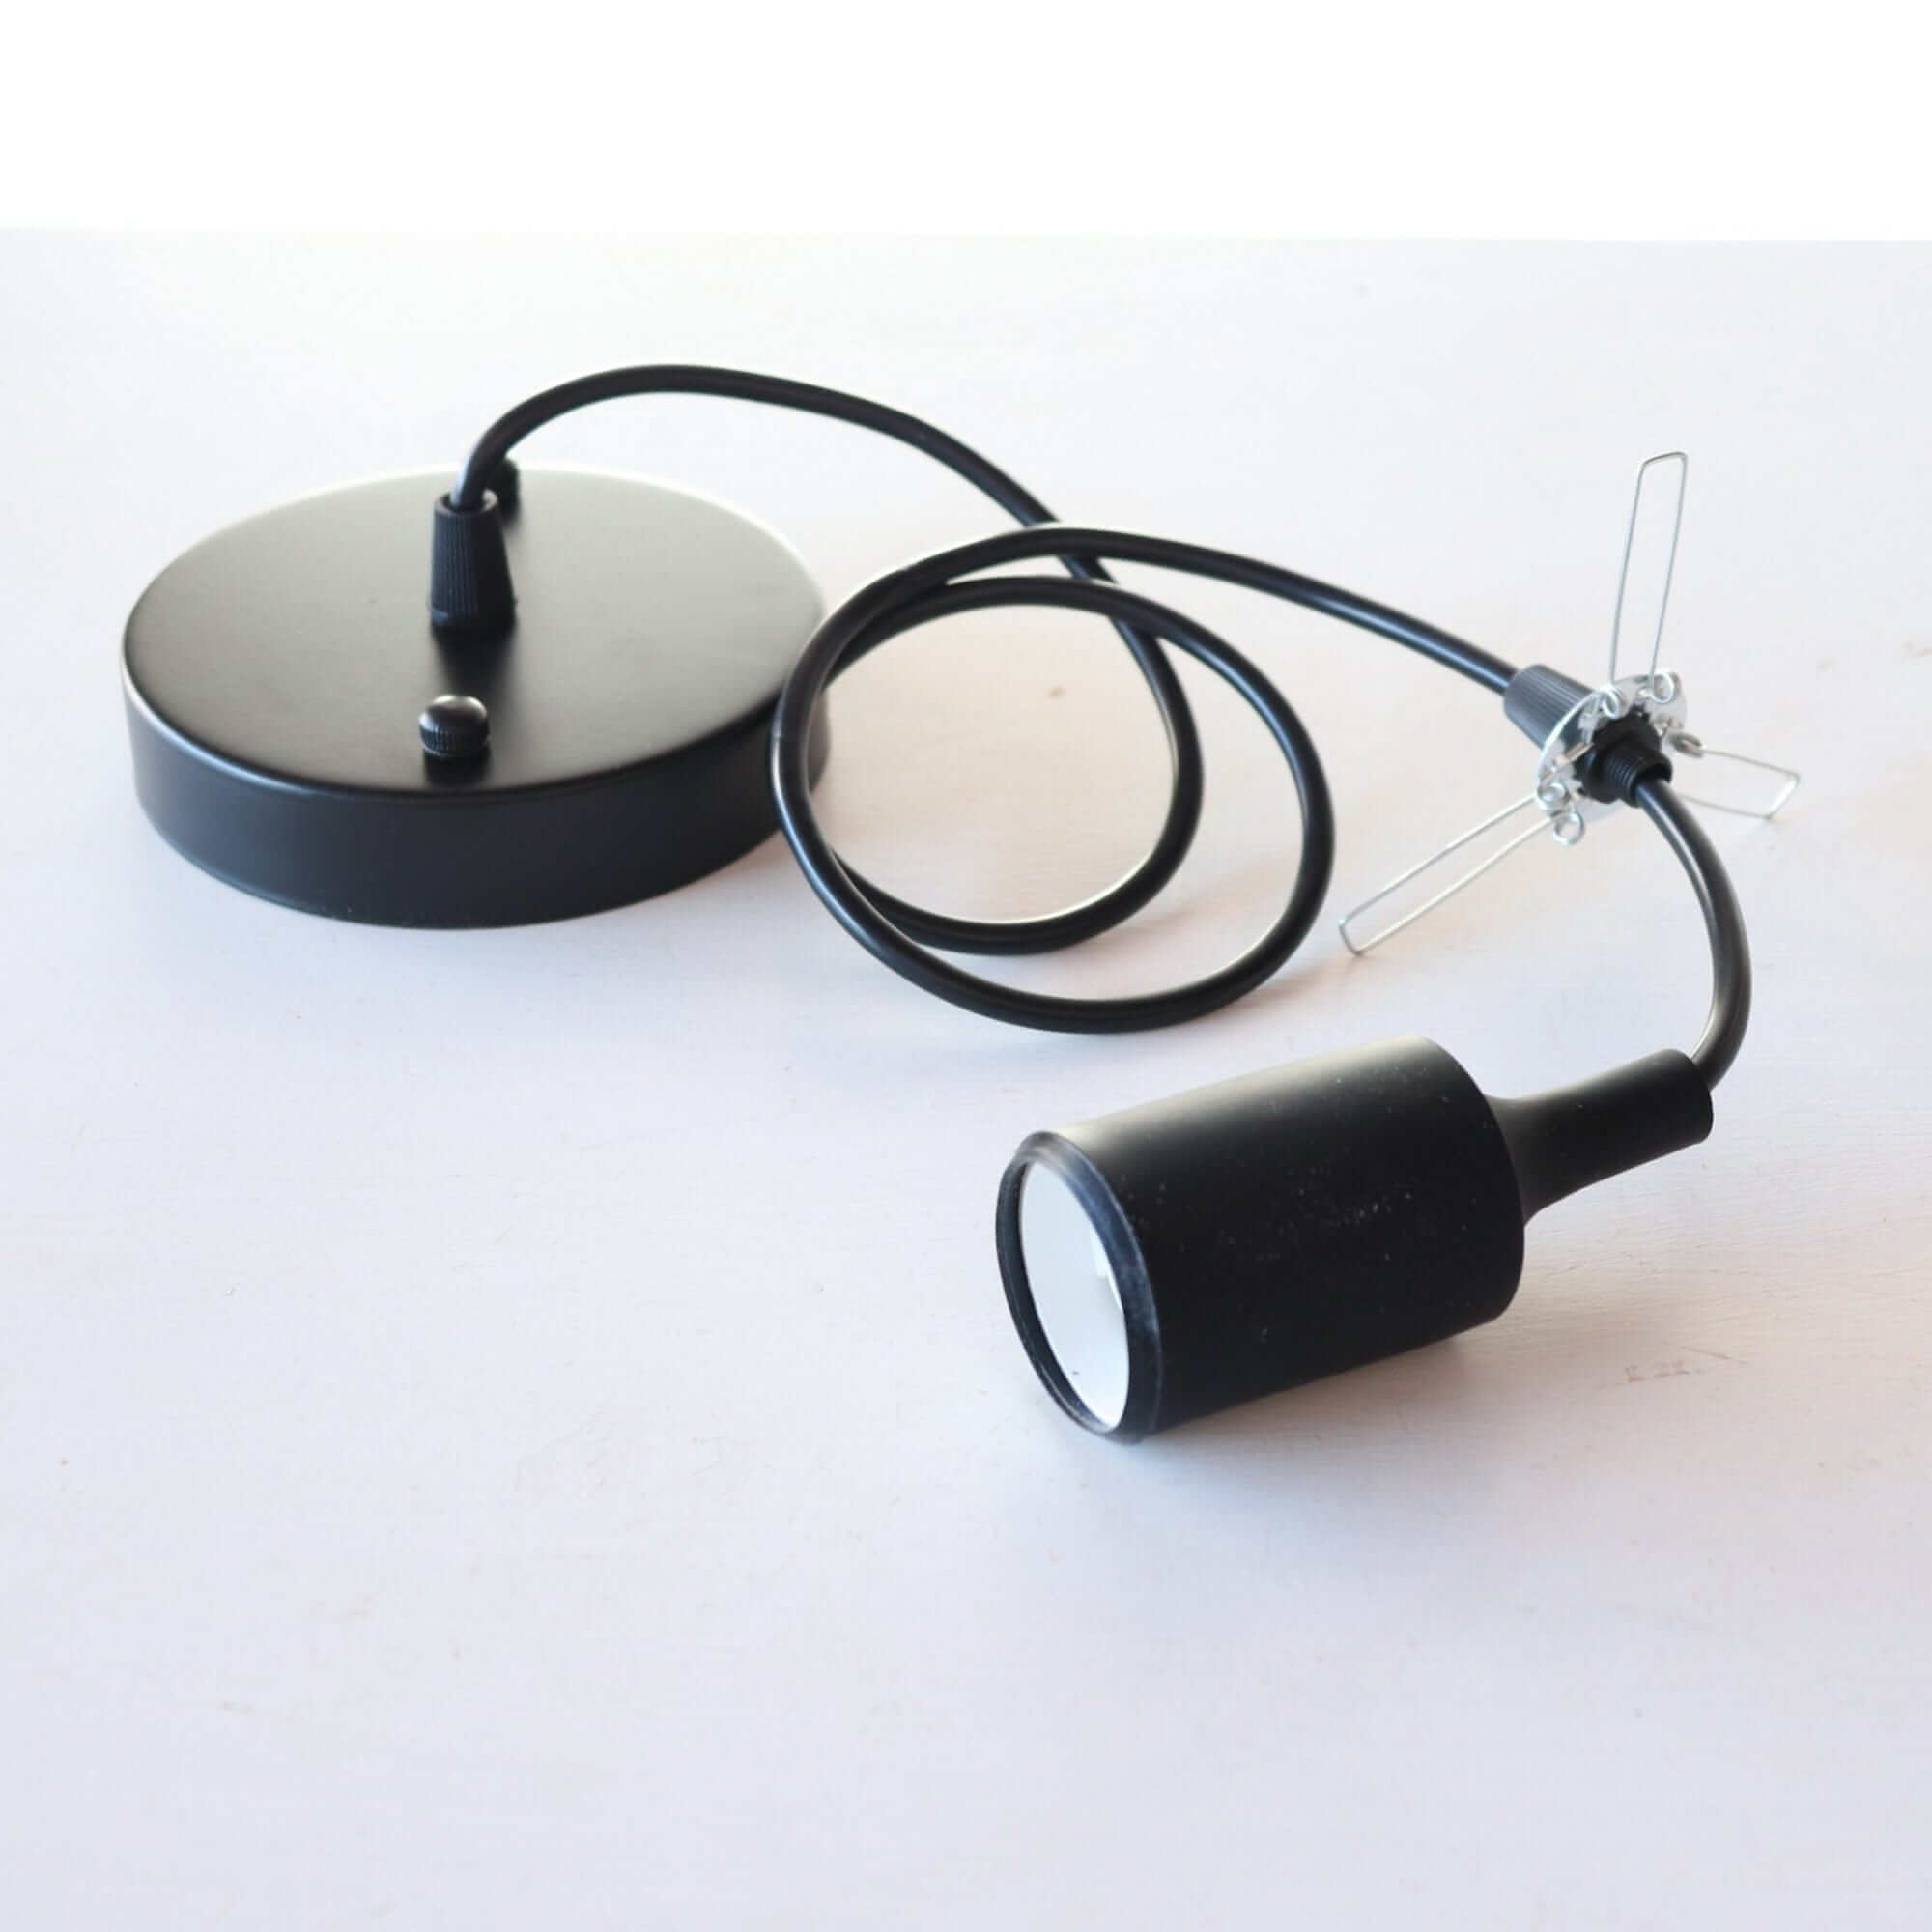 Cable Set For Pendant Light (Black, White, Natural)